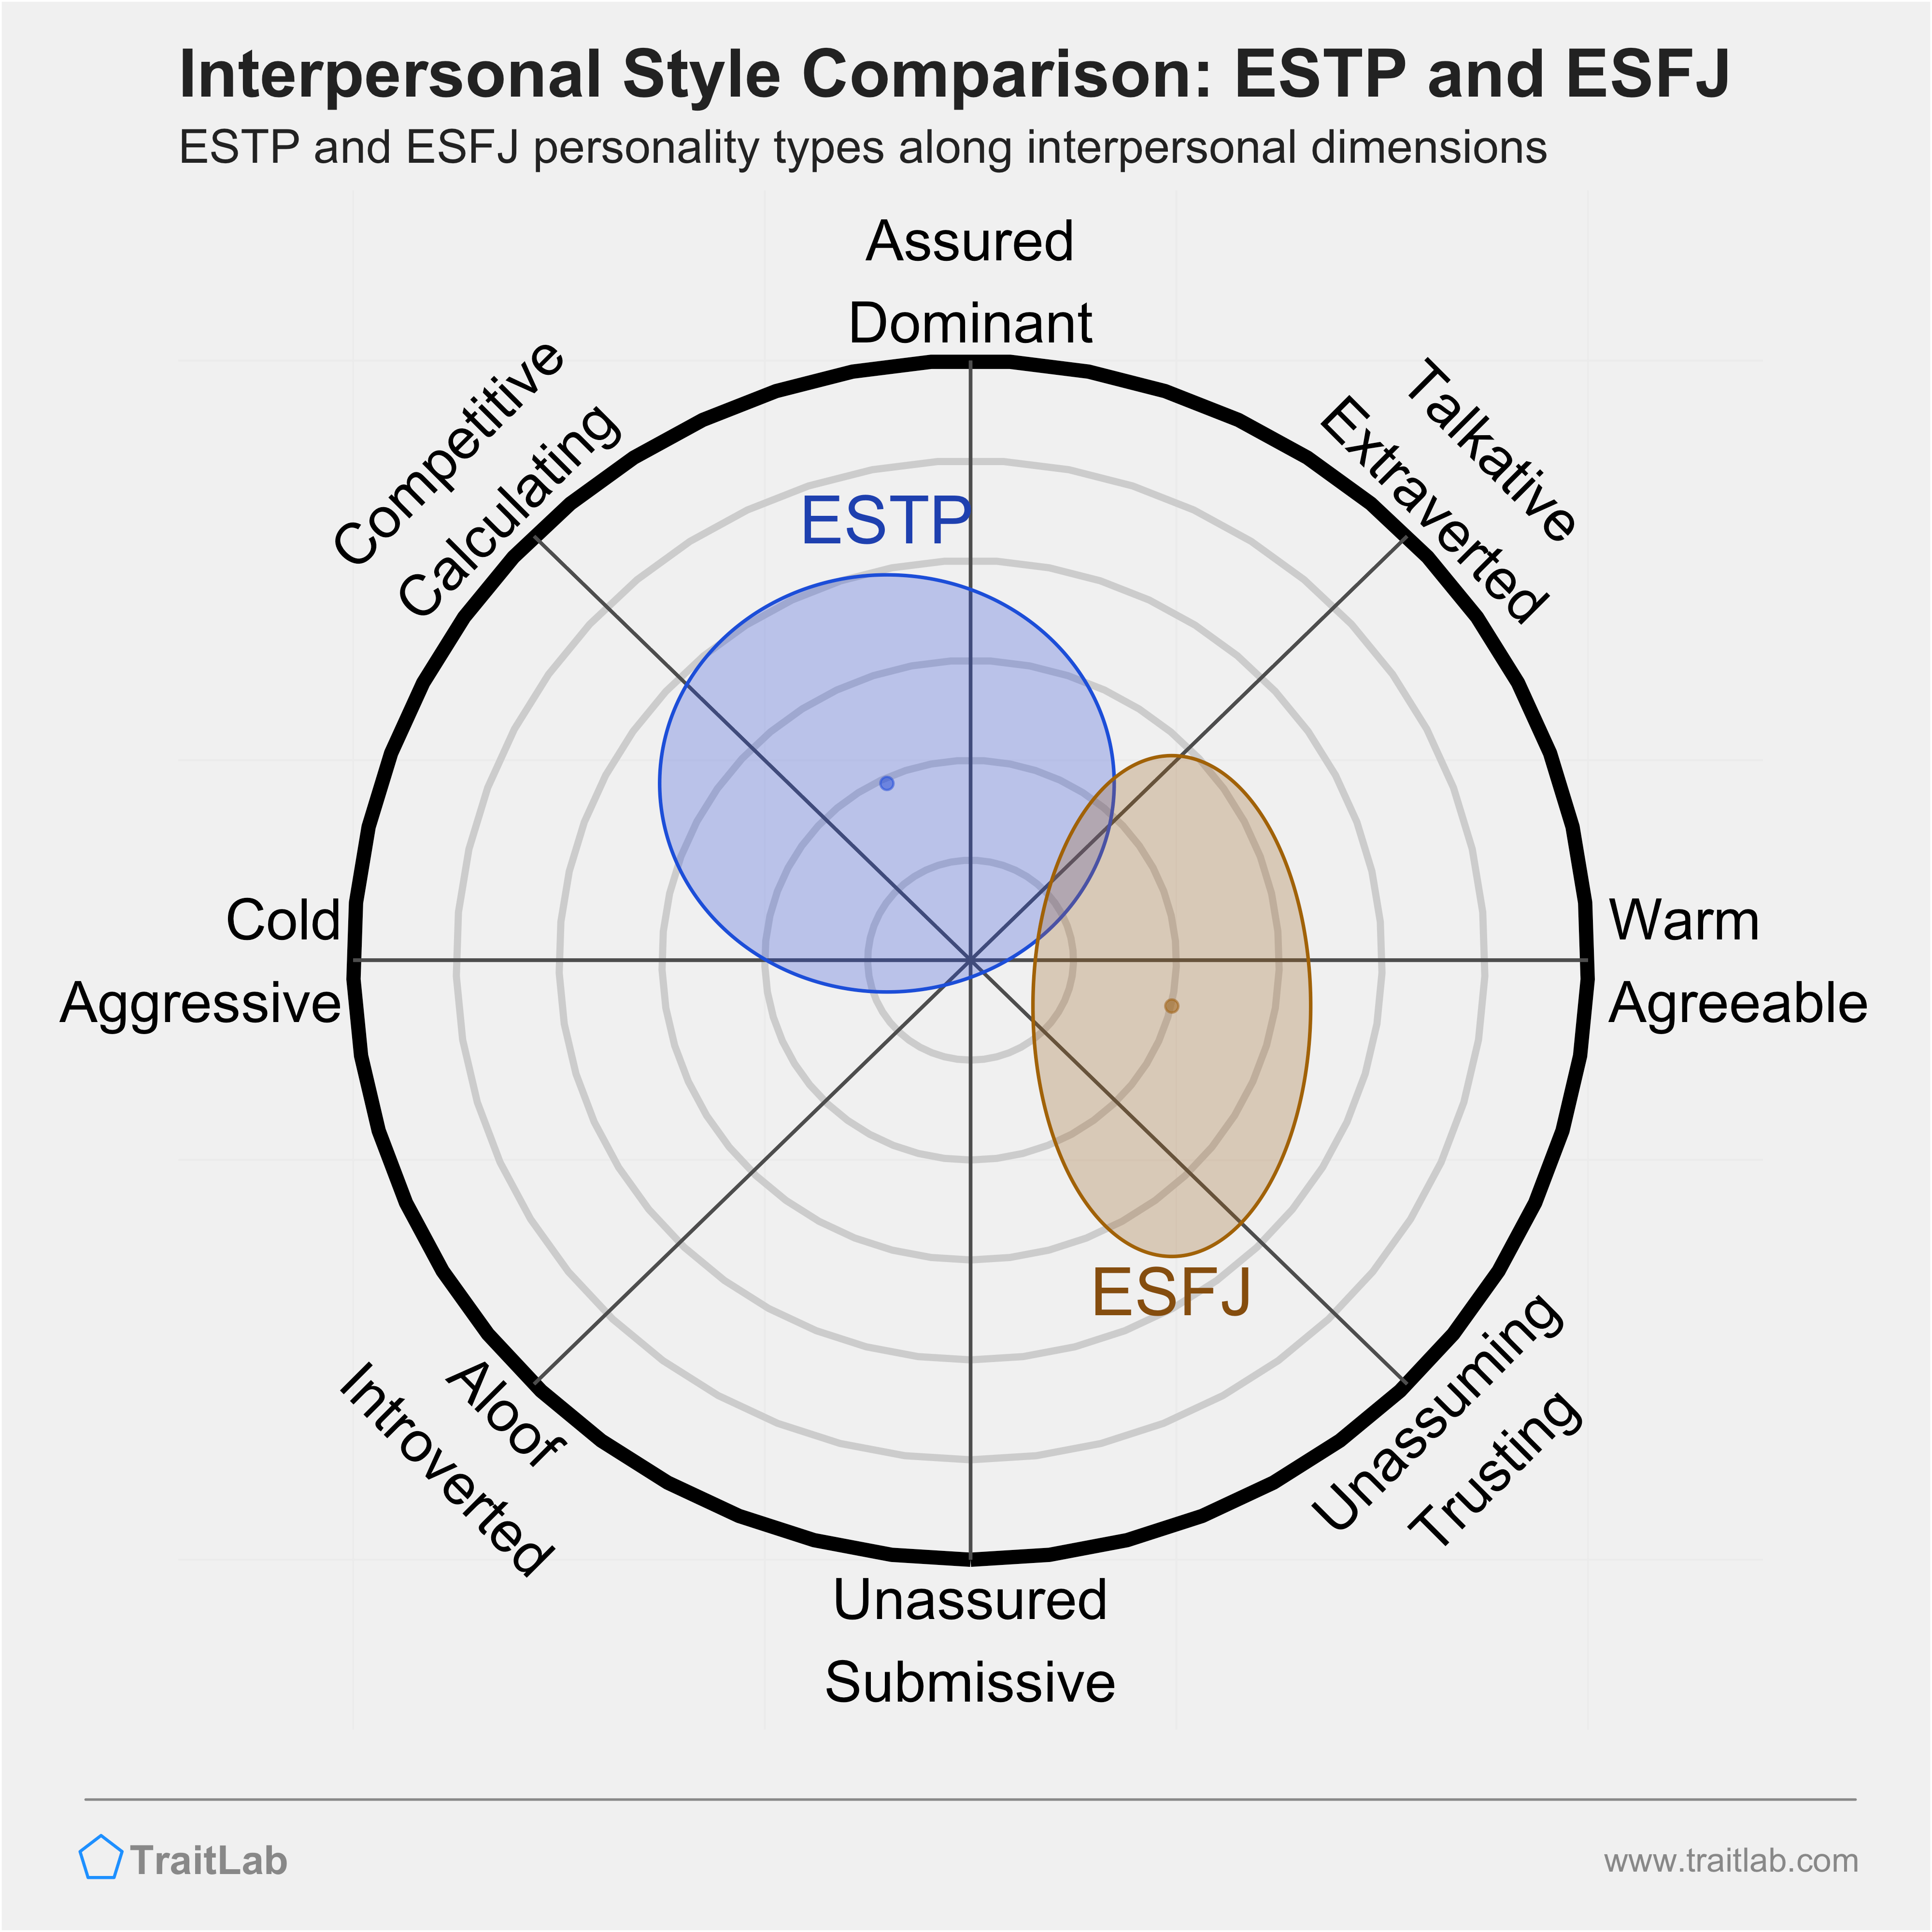 ESTP and ESFJ comparison across interpersonal dimensions